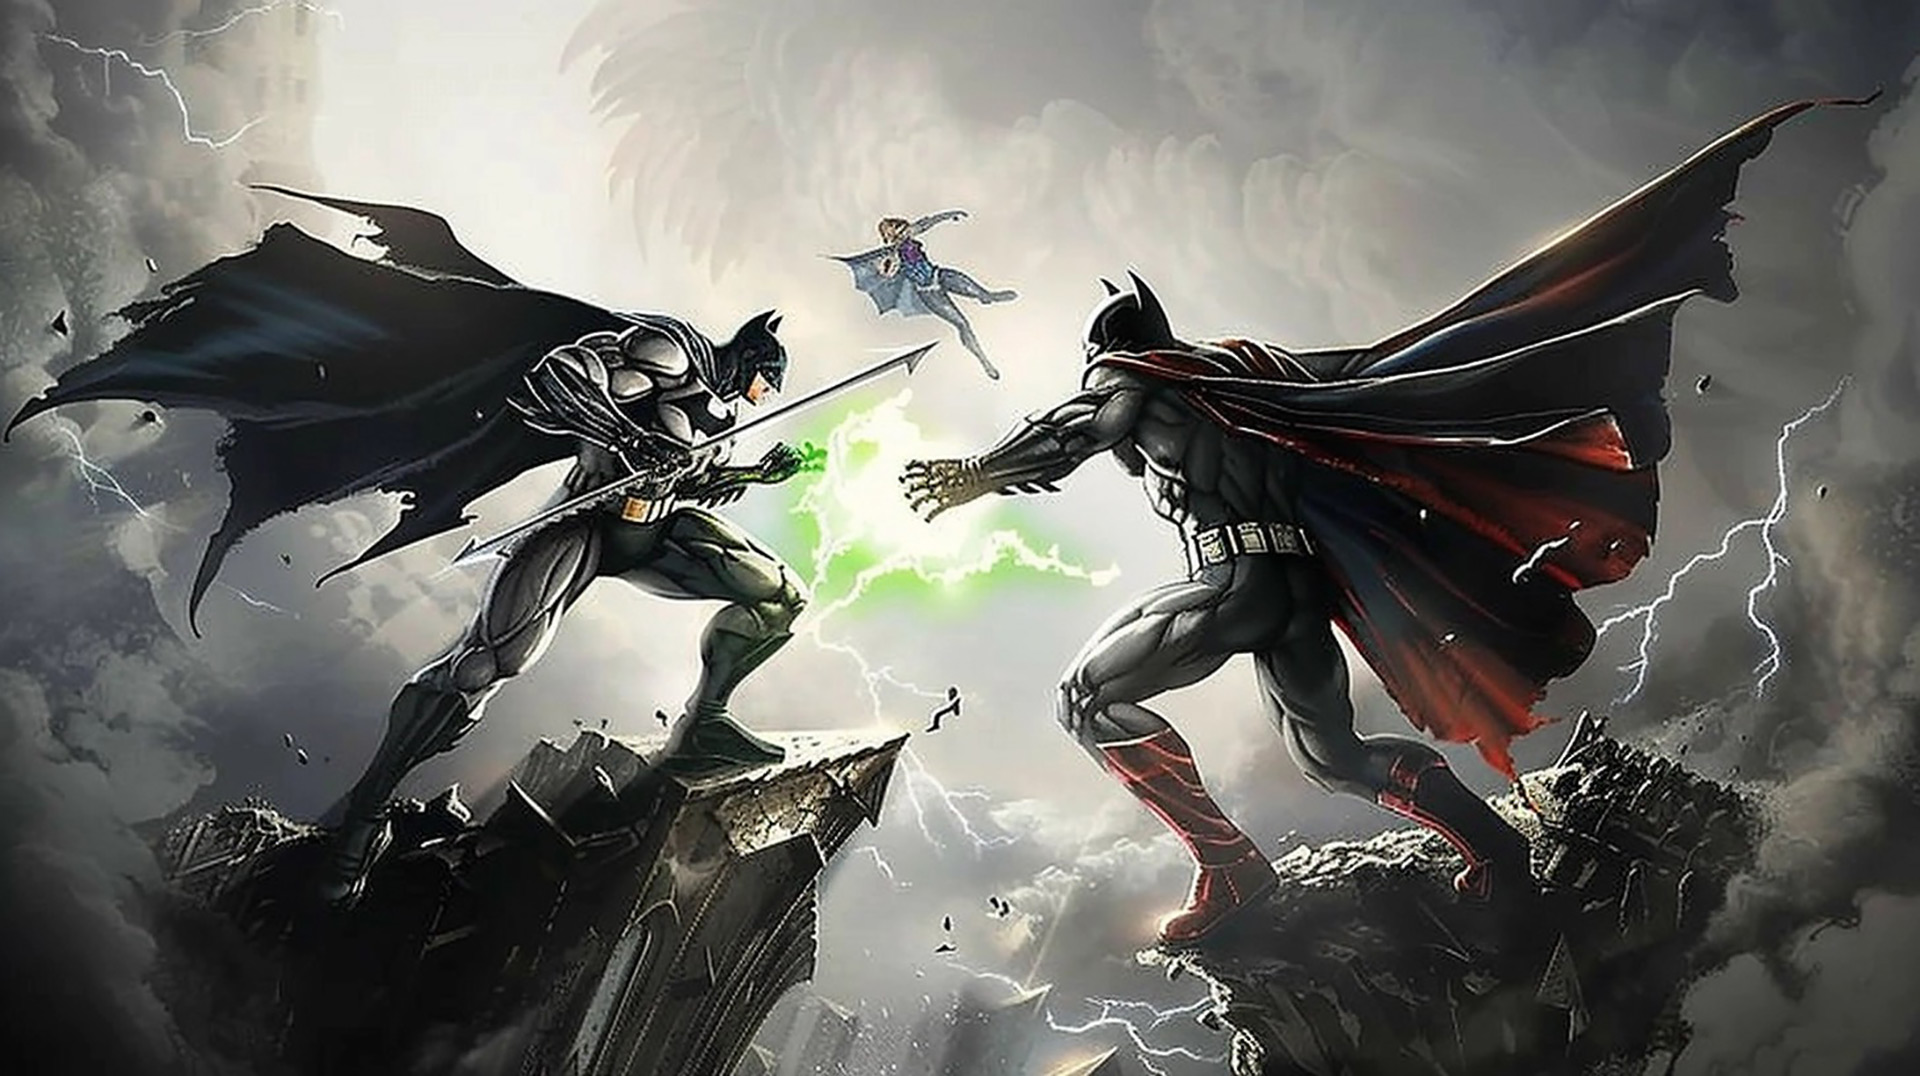 Heroic Struggle: Superman vs. Villain HD Desktop Backgrounds